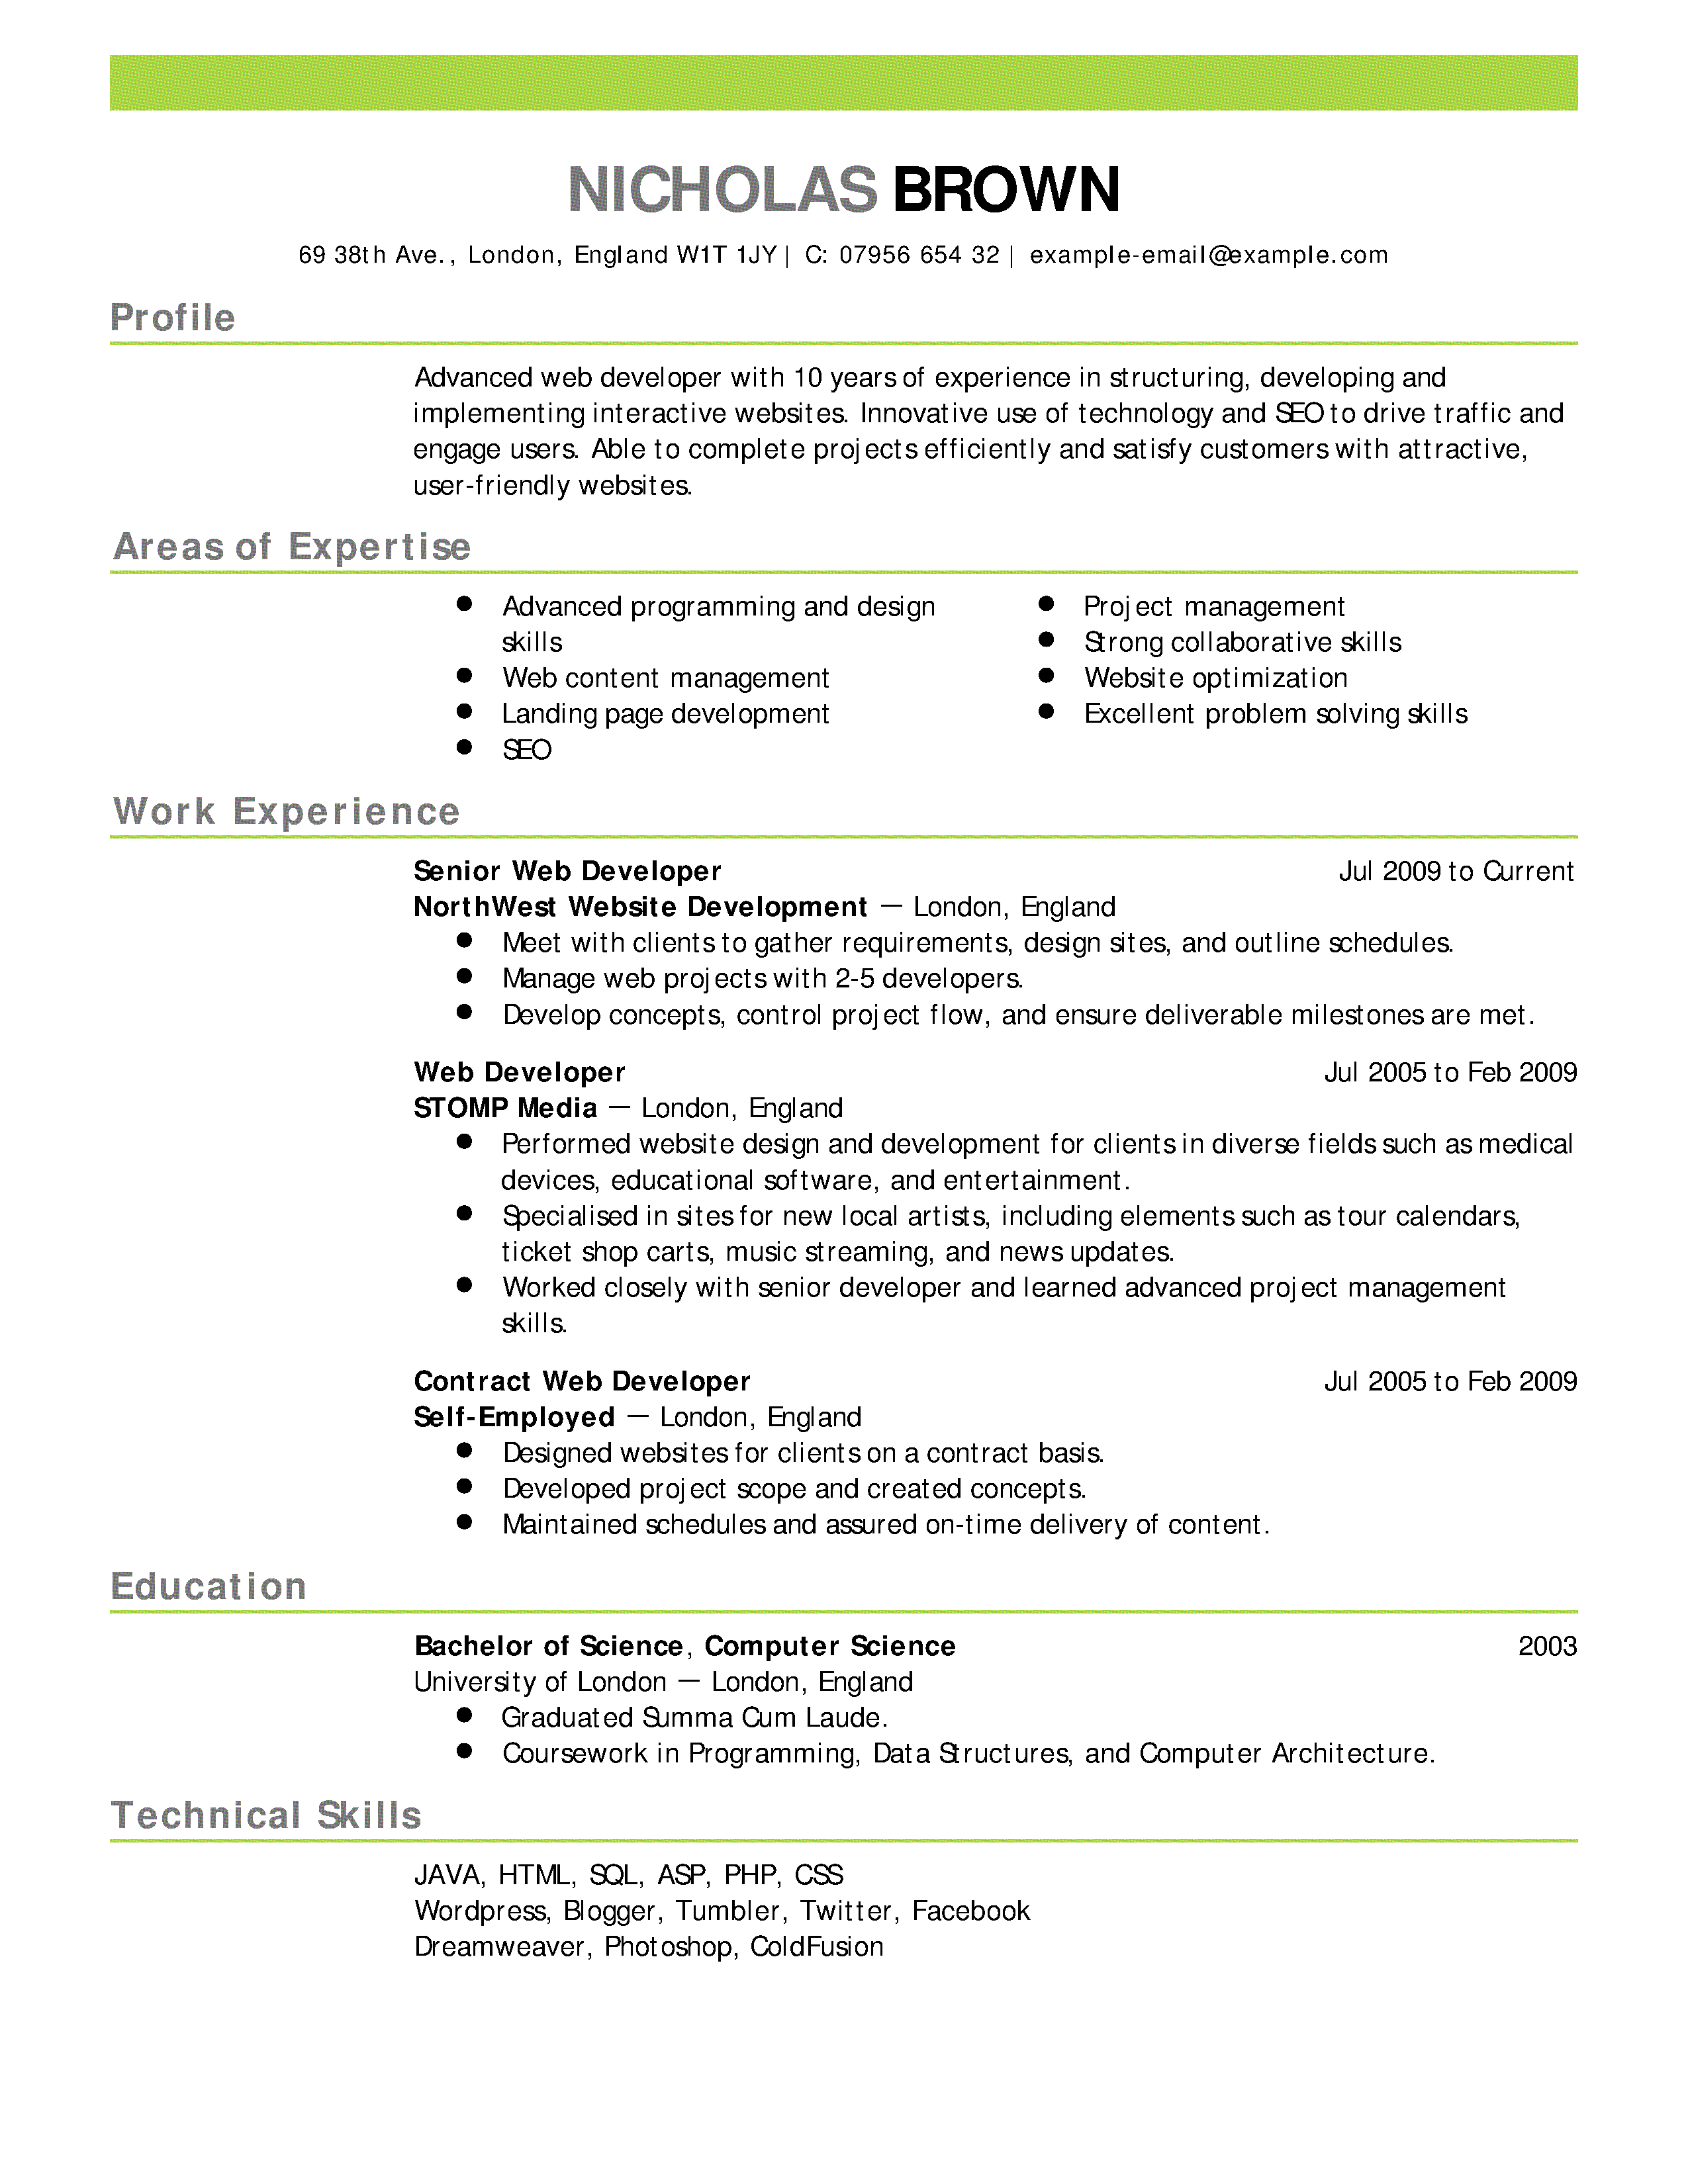 Resume Format Ideas 